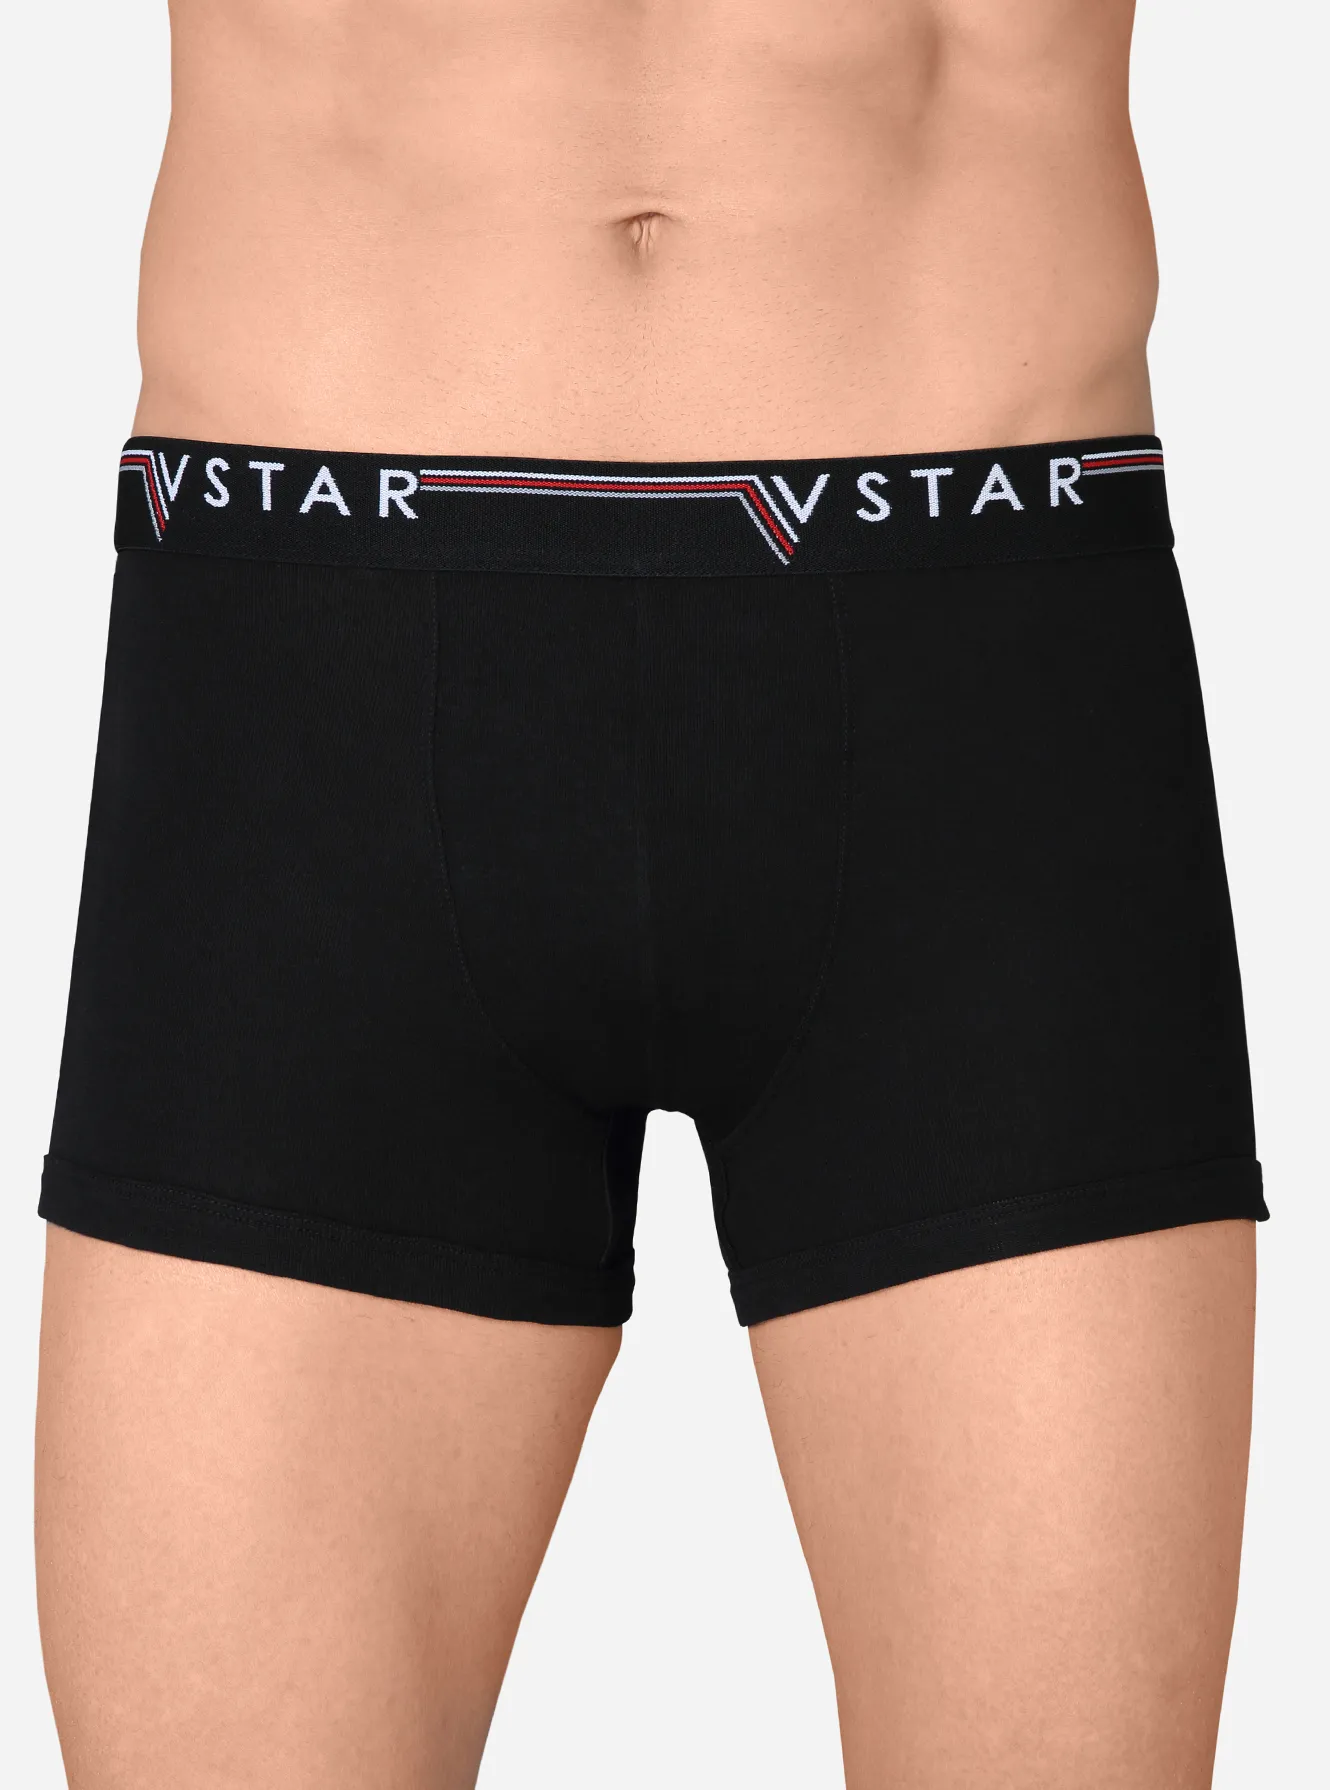 Buy Boxer Briefs For Men Online at Best Prices - VStar